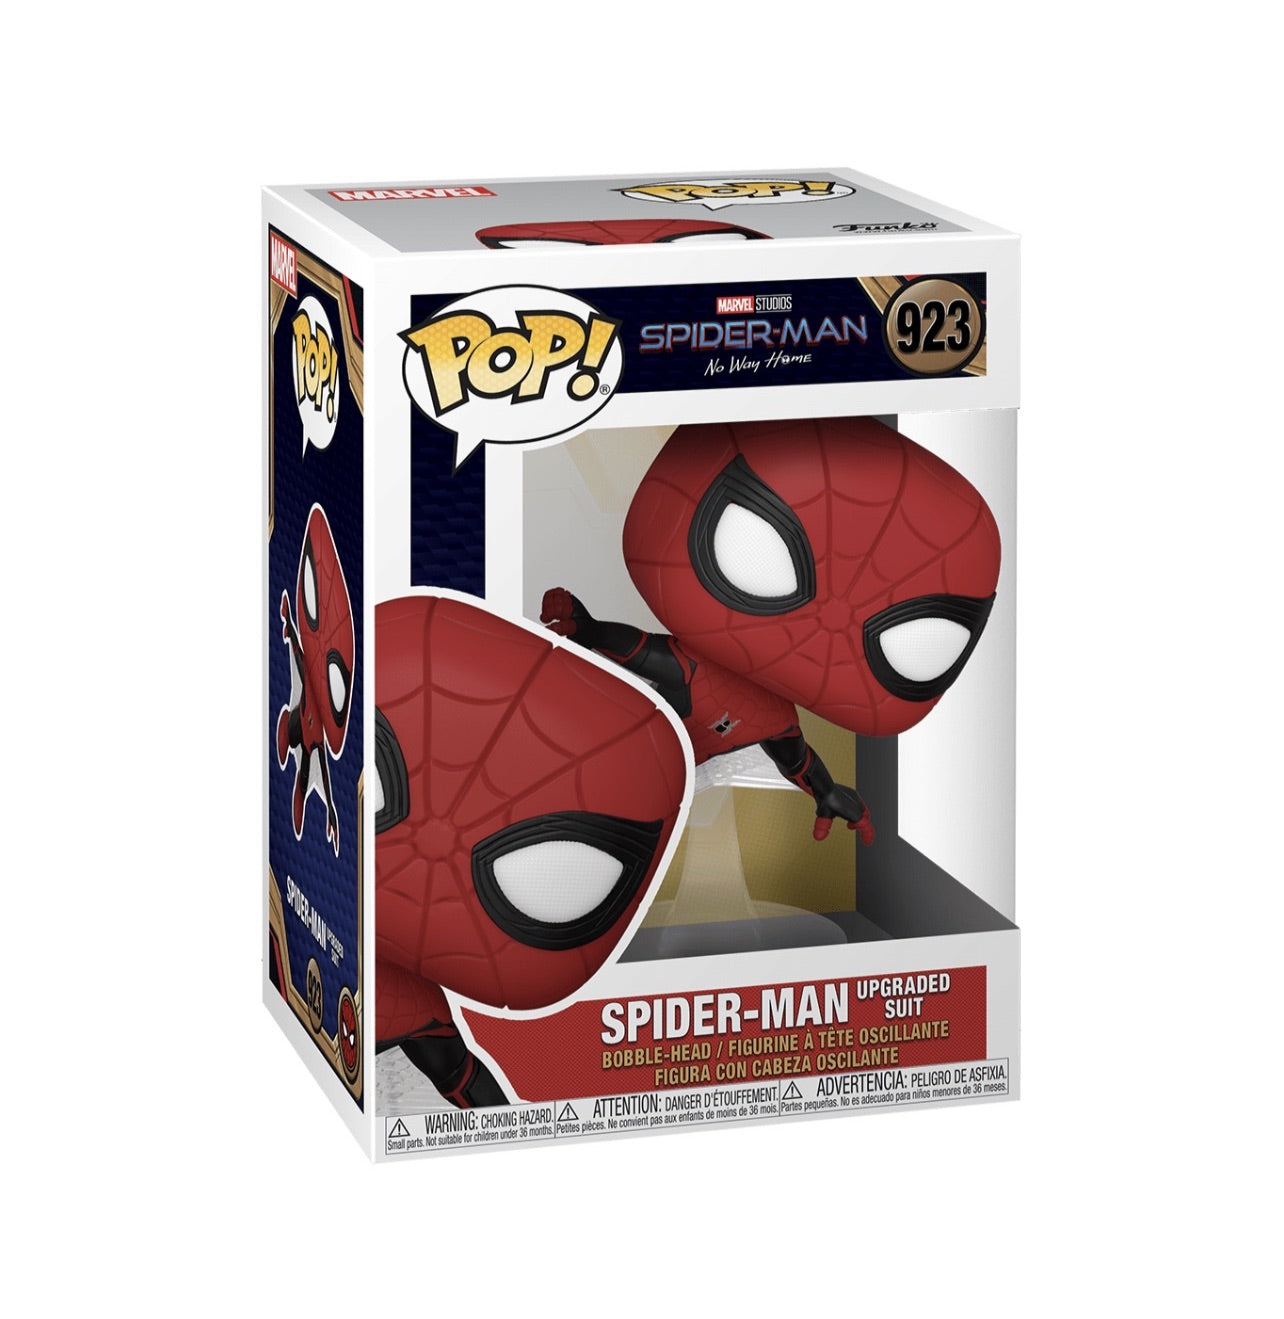 POP! Marvel NWH Spider-Man (Upgraded Suit) #923